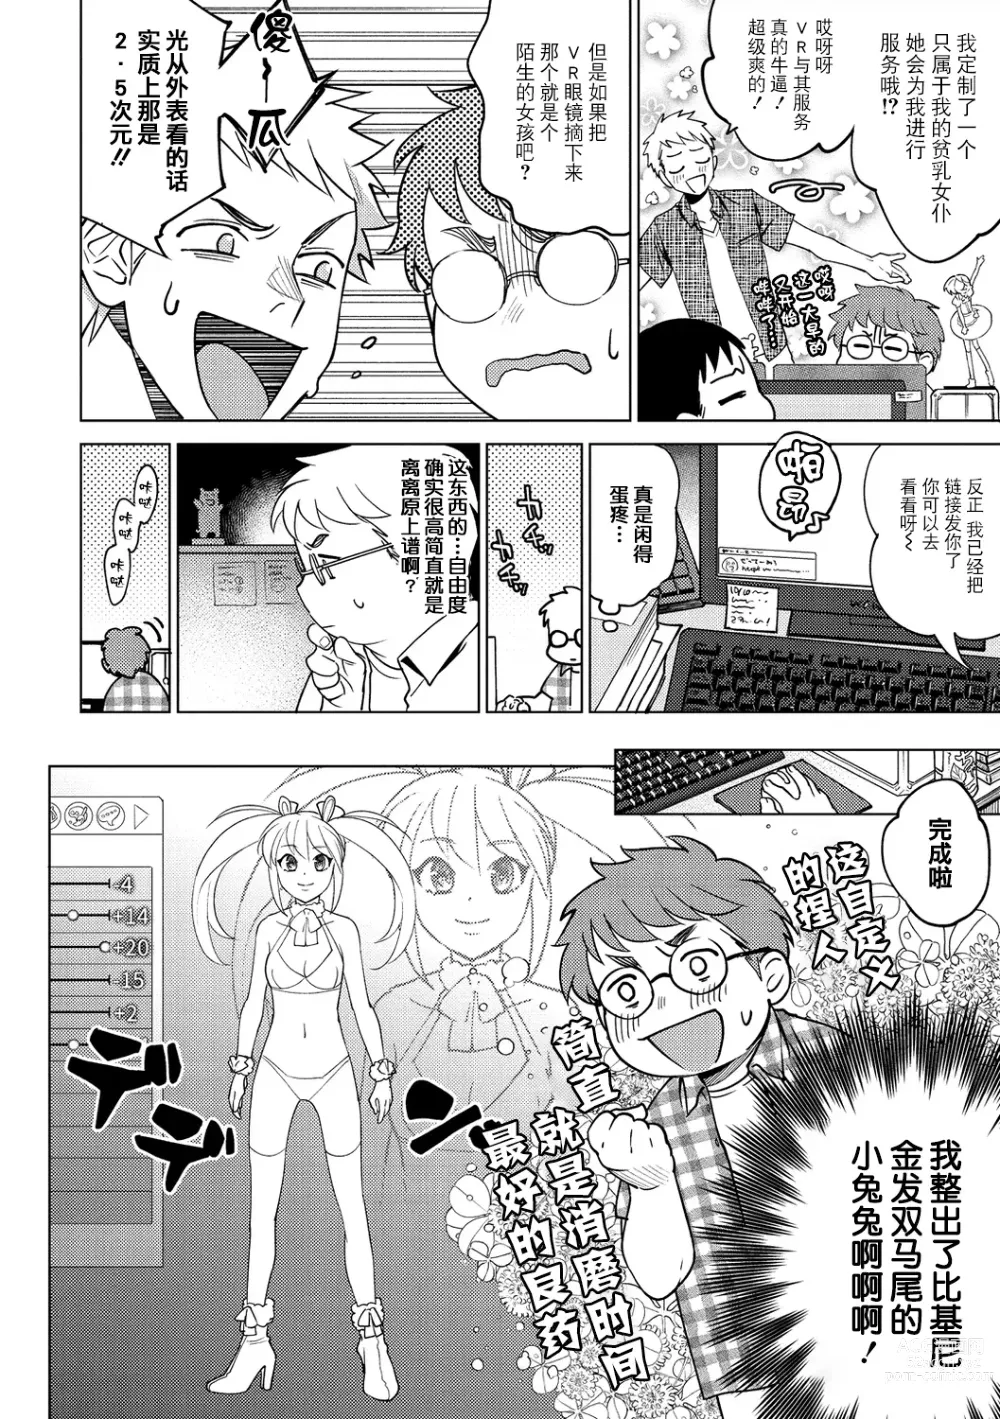 Page 4 of manga DREAM ni Kogarete - Longing For a Dream